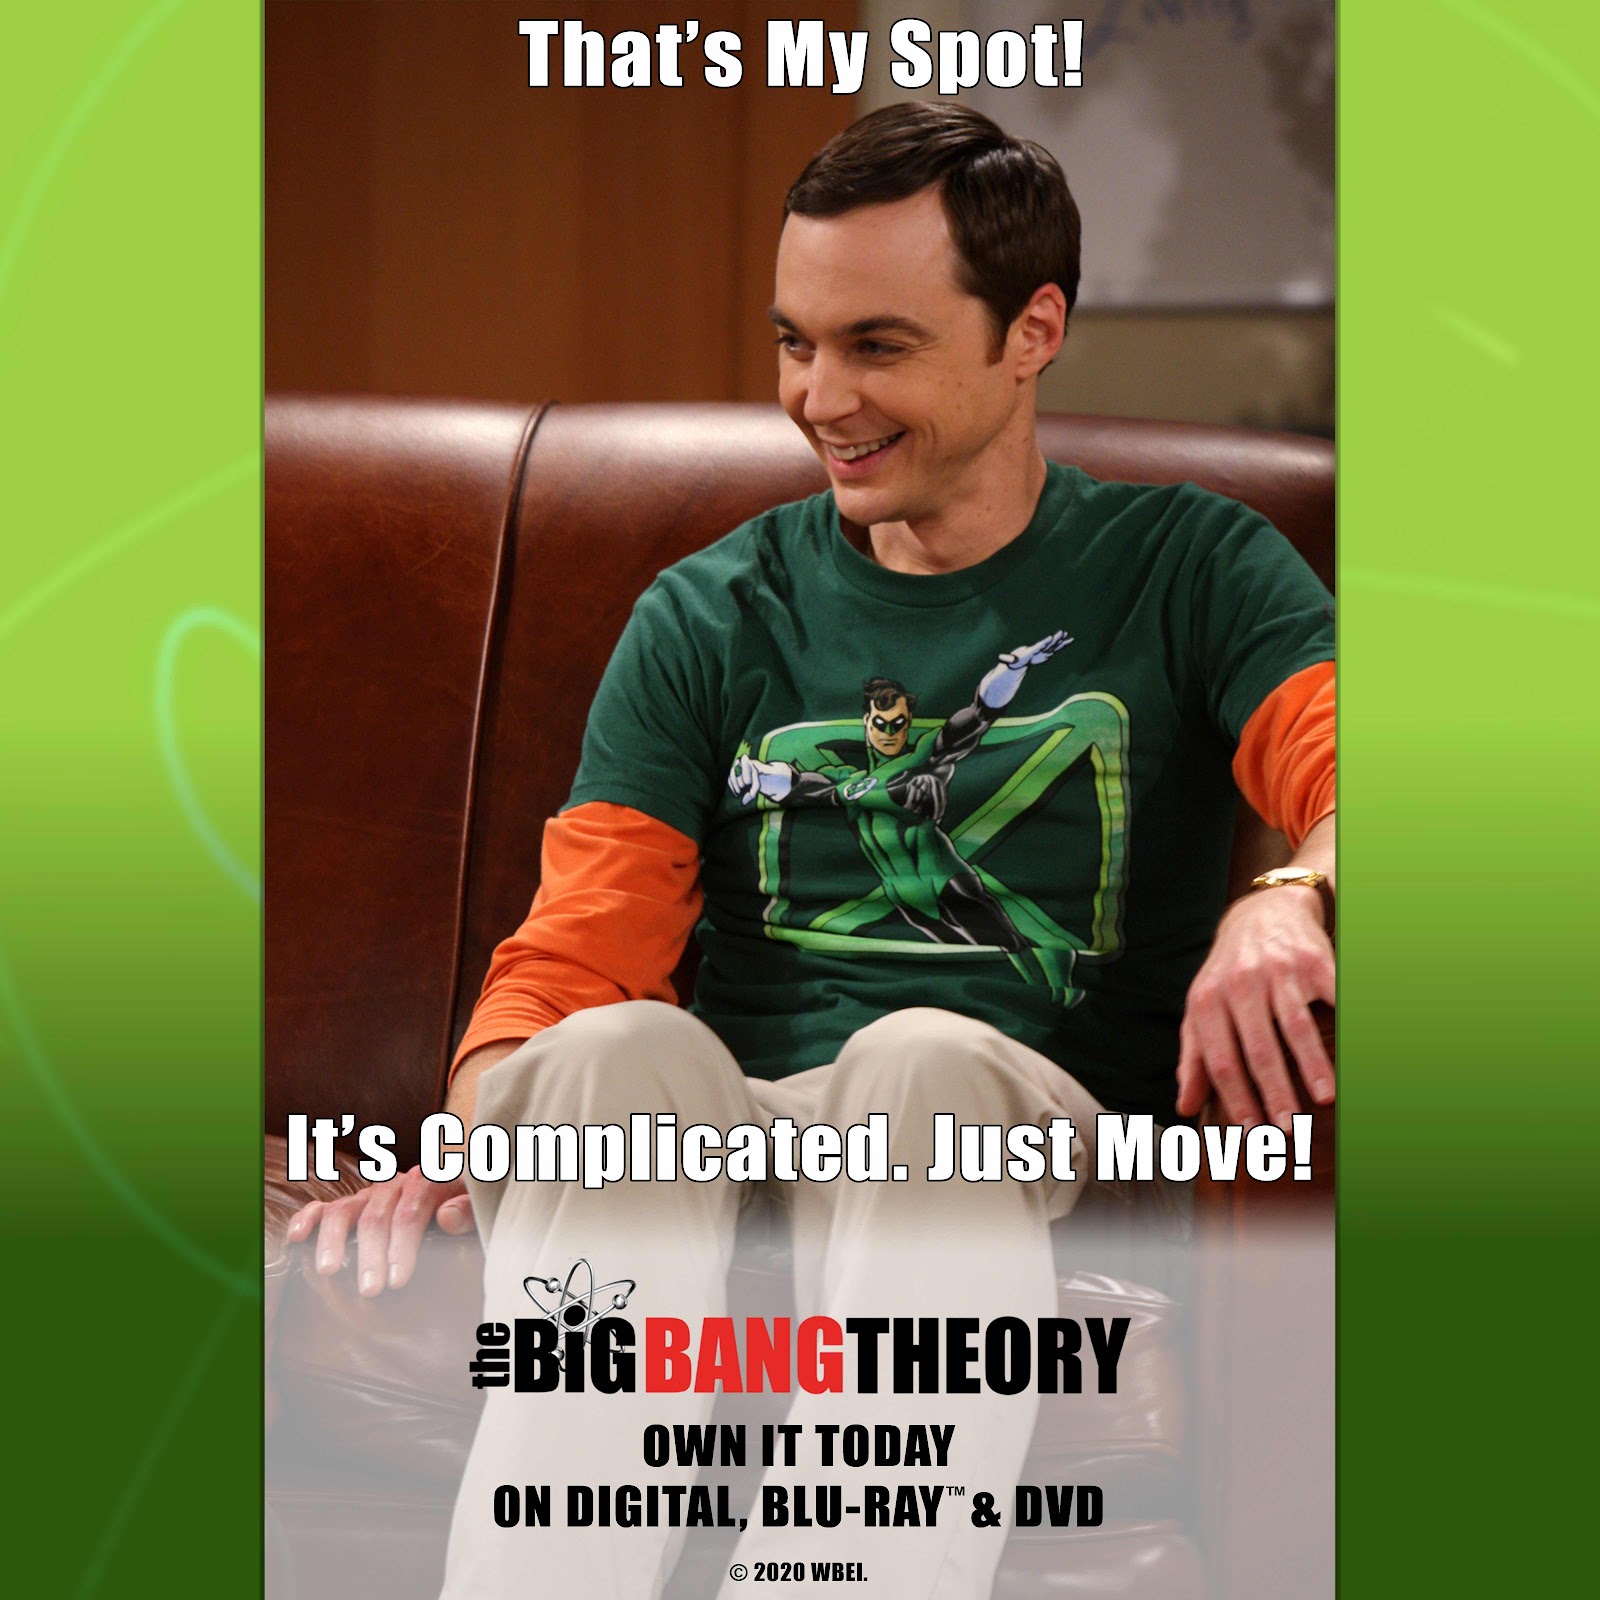 Checkout never before seen Sheldon Cooper meme from THE BIG BANG THEORY # BigBangTheory